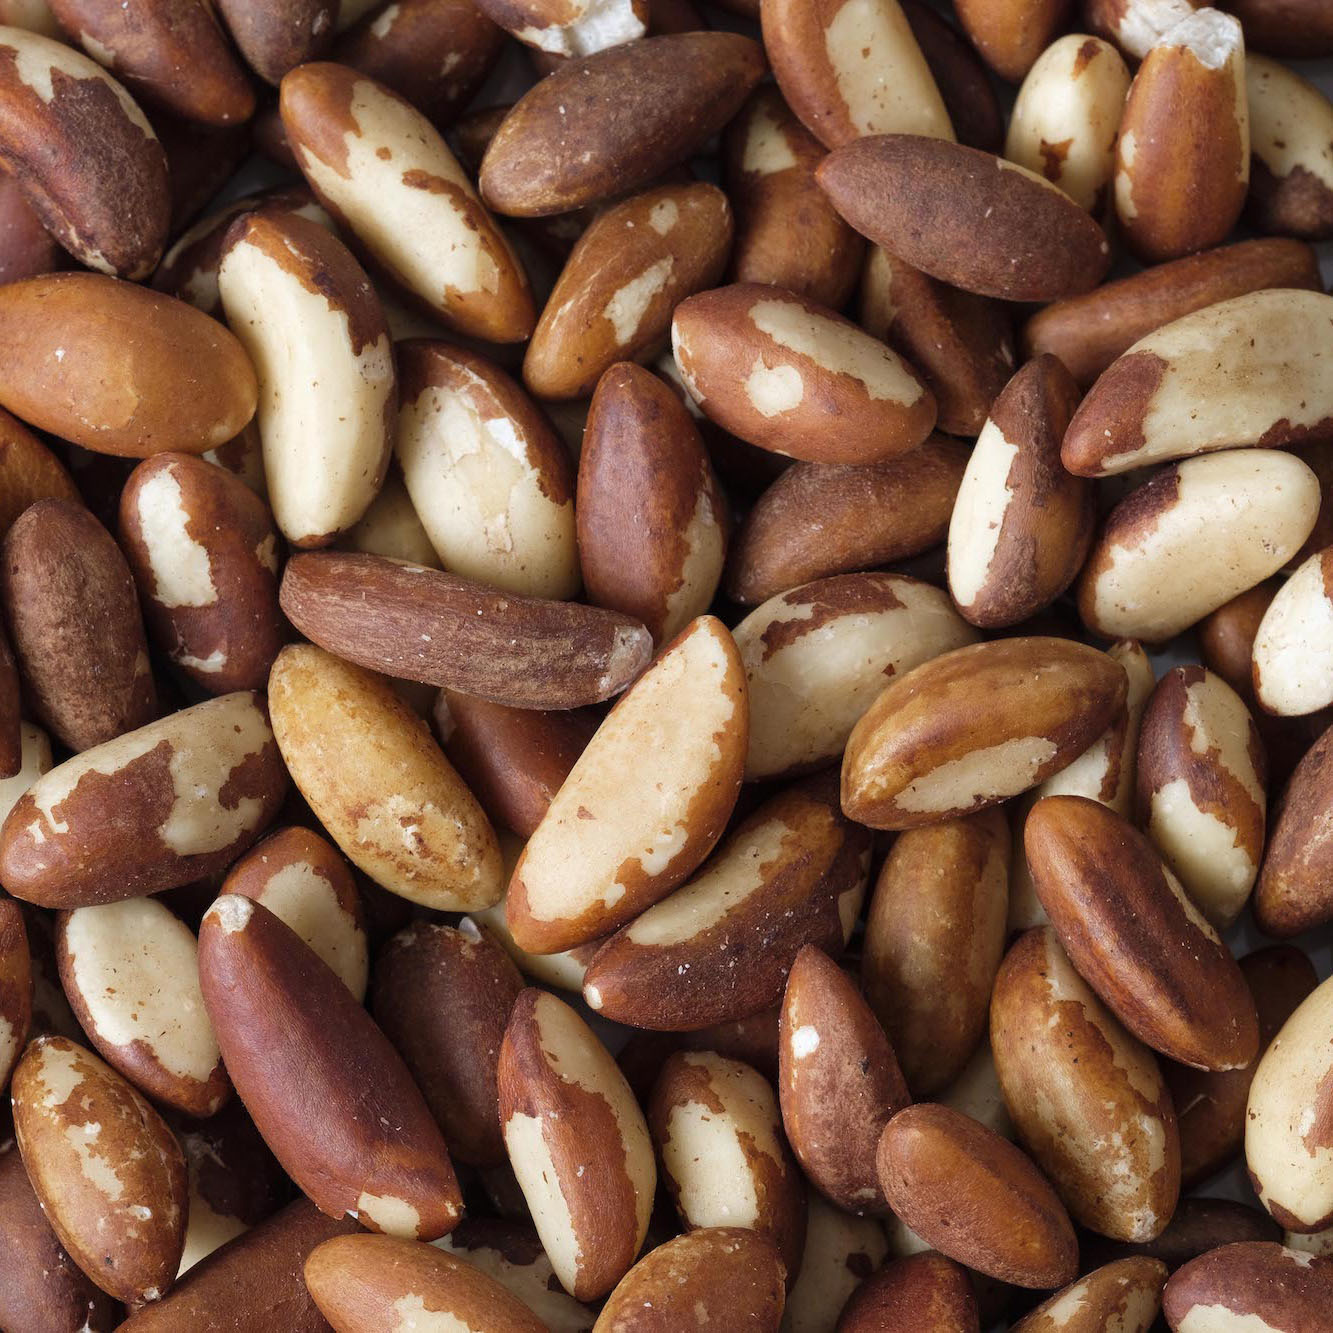 Organic Brazil Nuts — COMING SOON